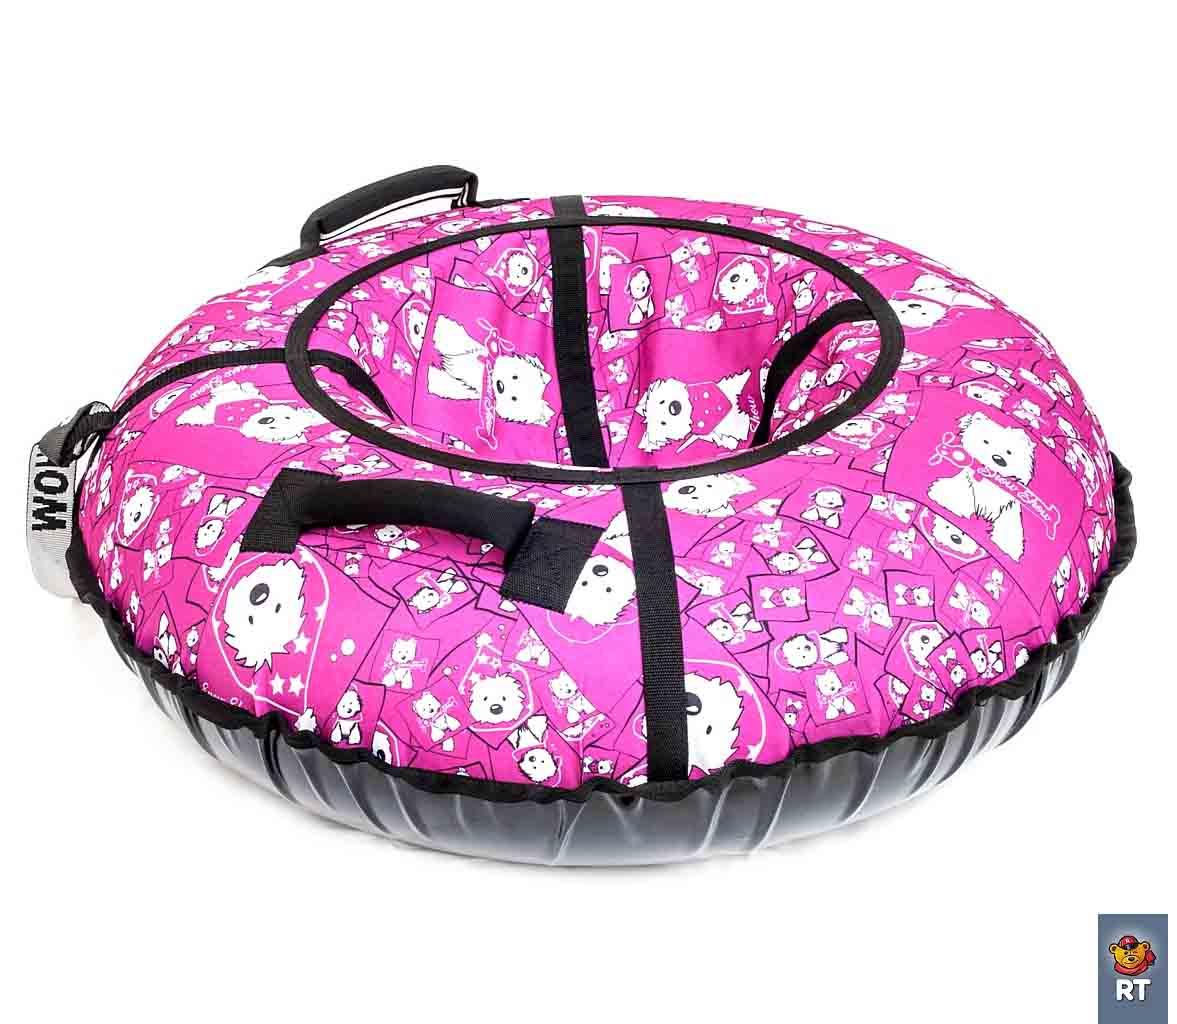 Санки надувные – Тюбинг, собачки на розовом, диаметр 105 см  